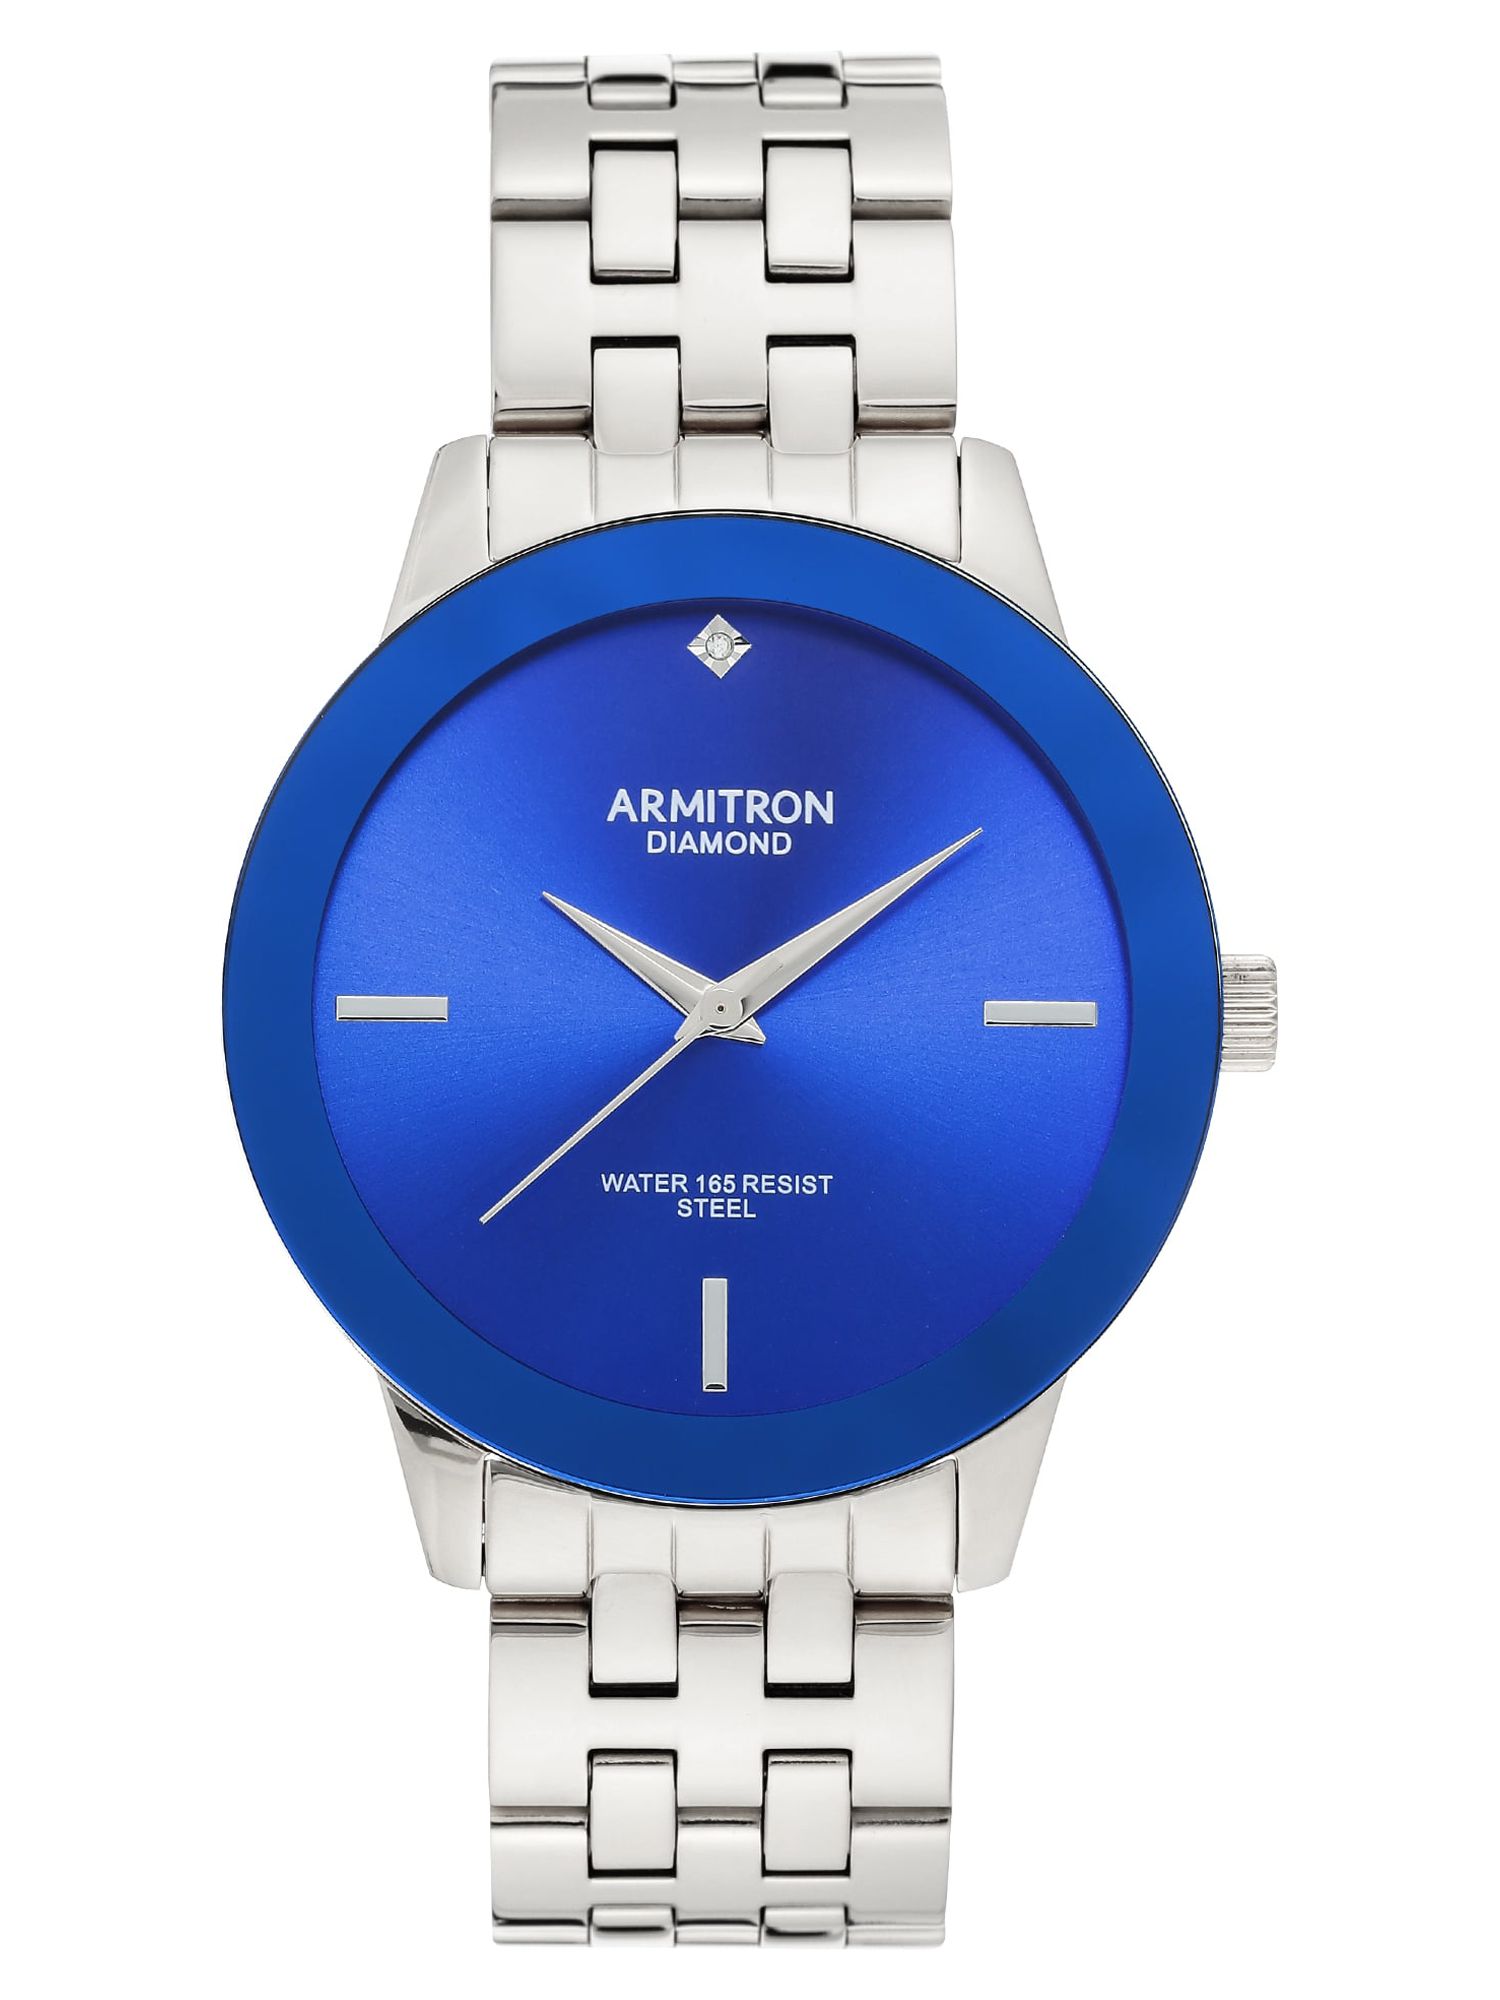 Armitron Men's Silver-Tone and Blue Diamond Dial Dress Watch - image 1 of 3